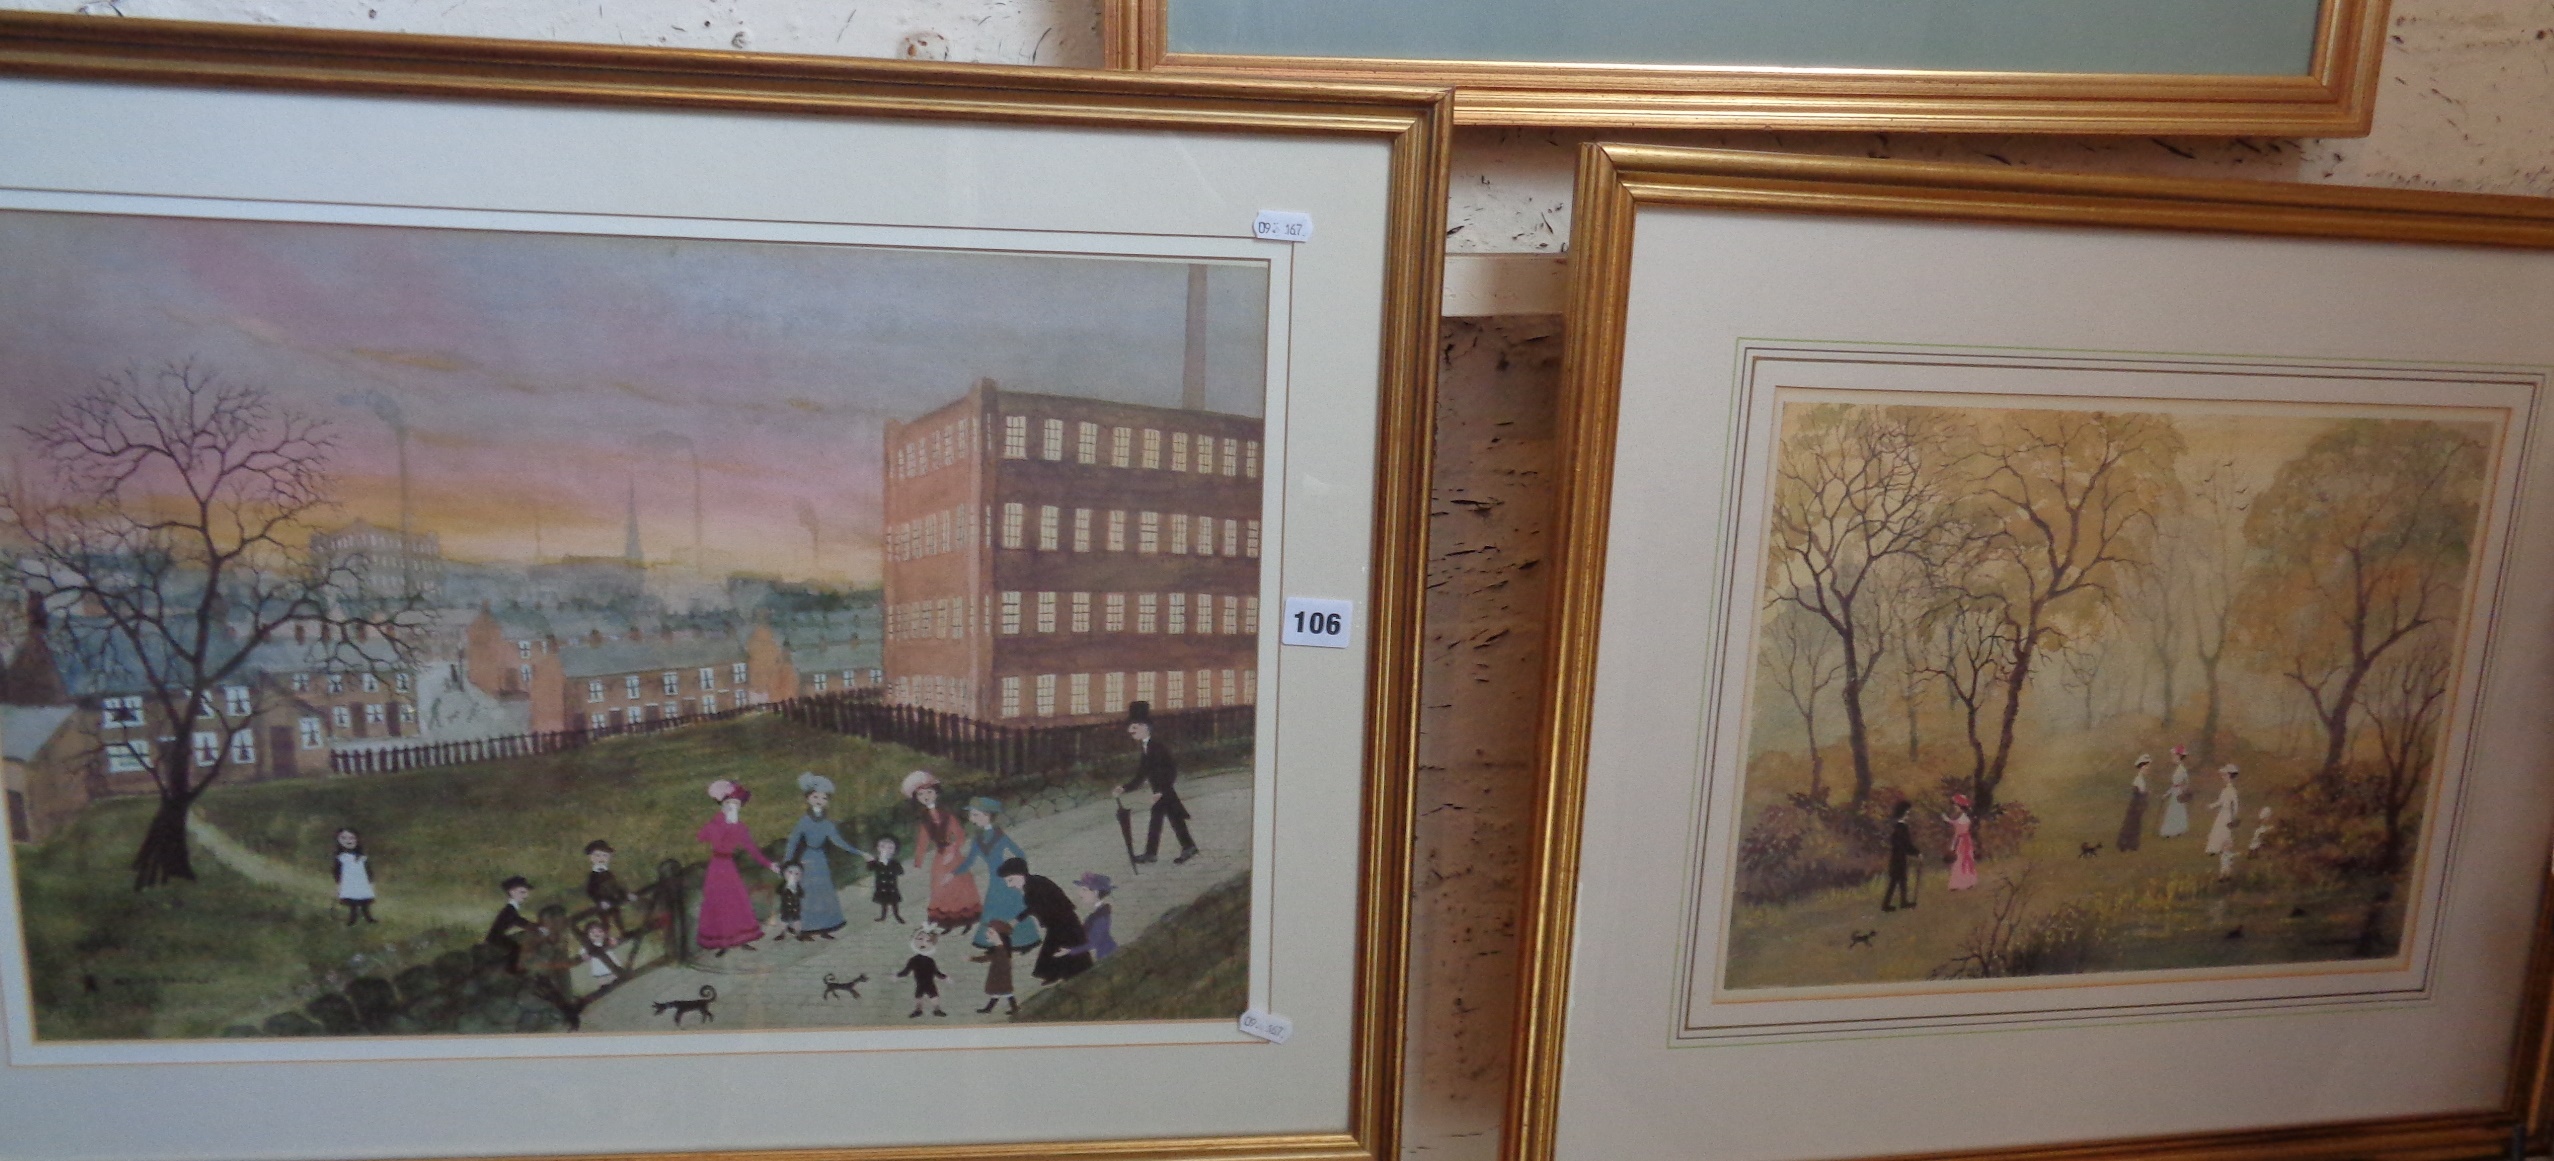 Two large Helen Bradley coloured prints